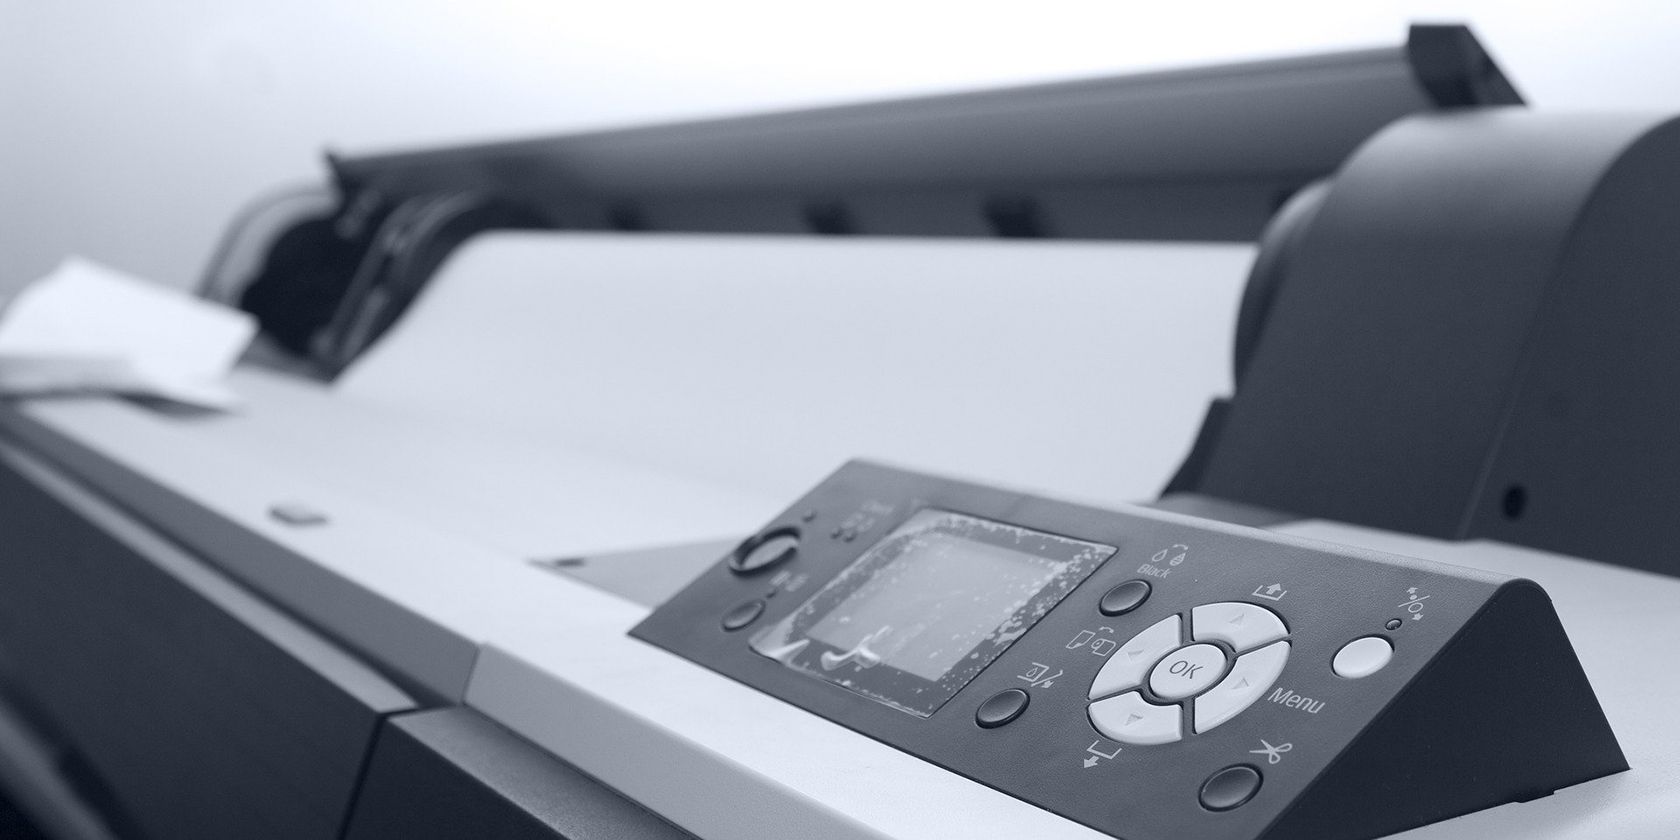 typical printer